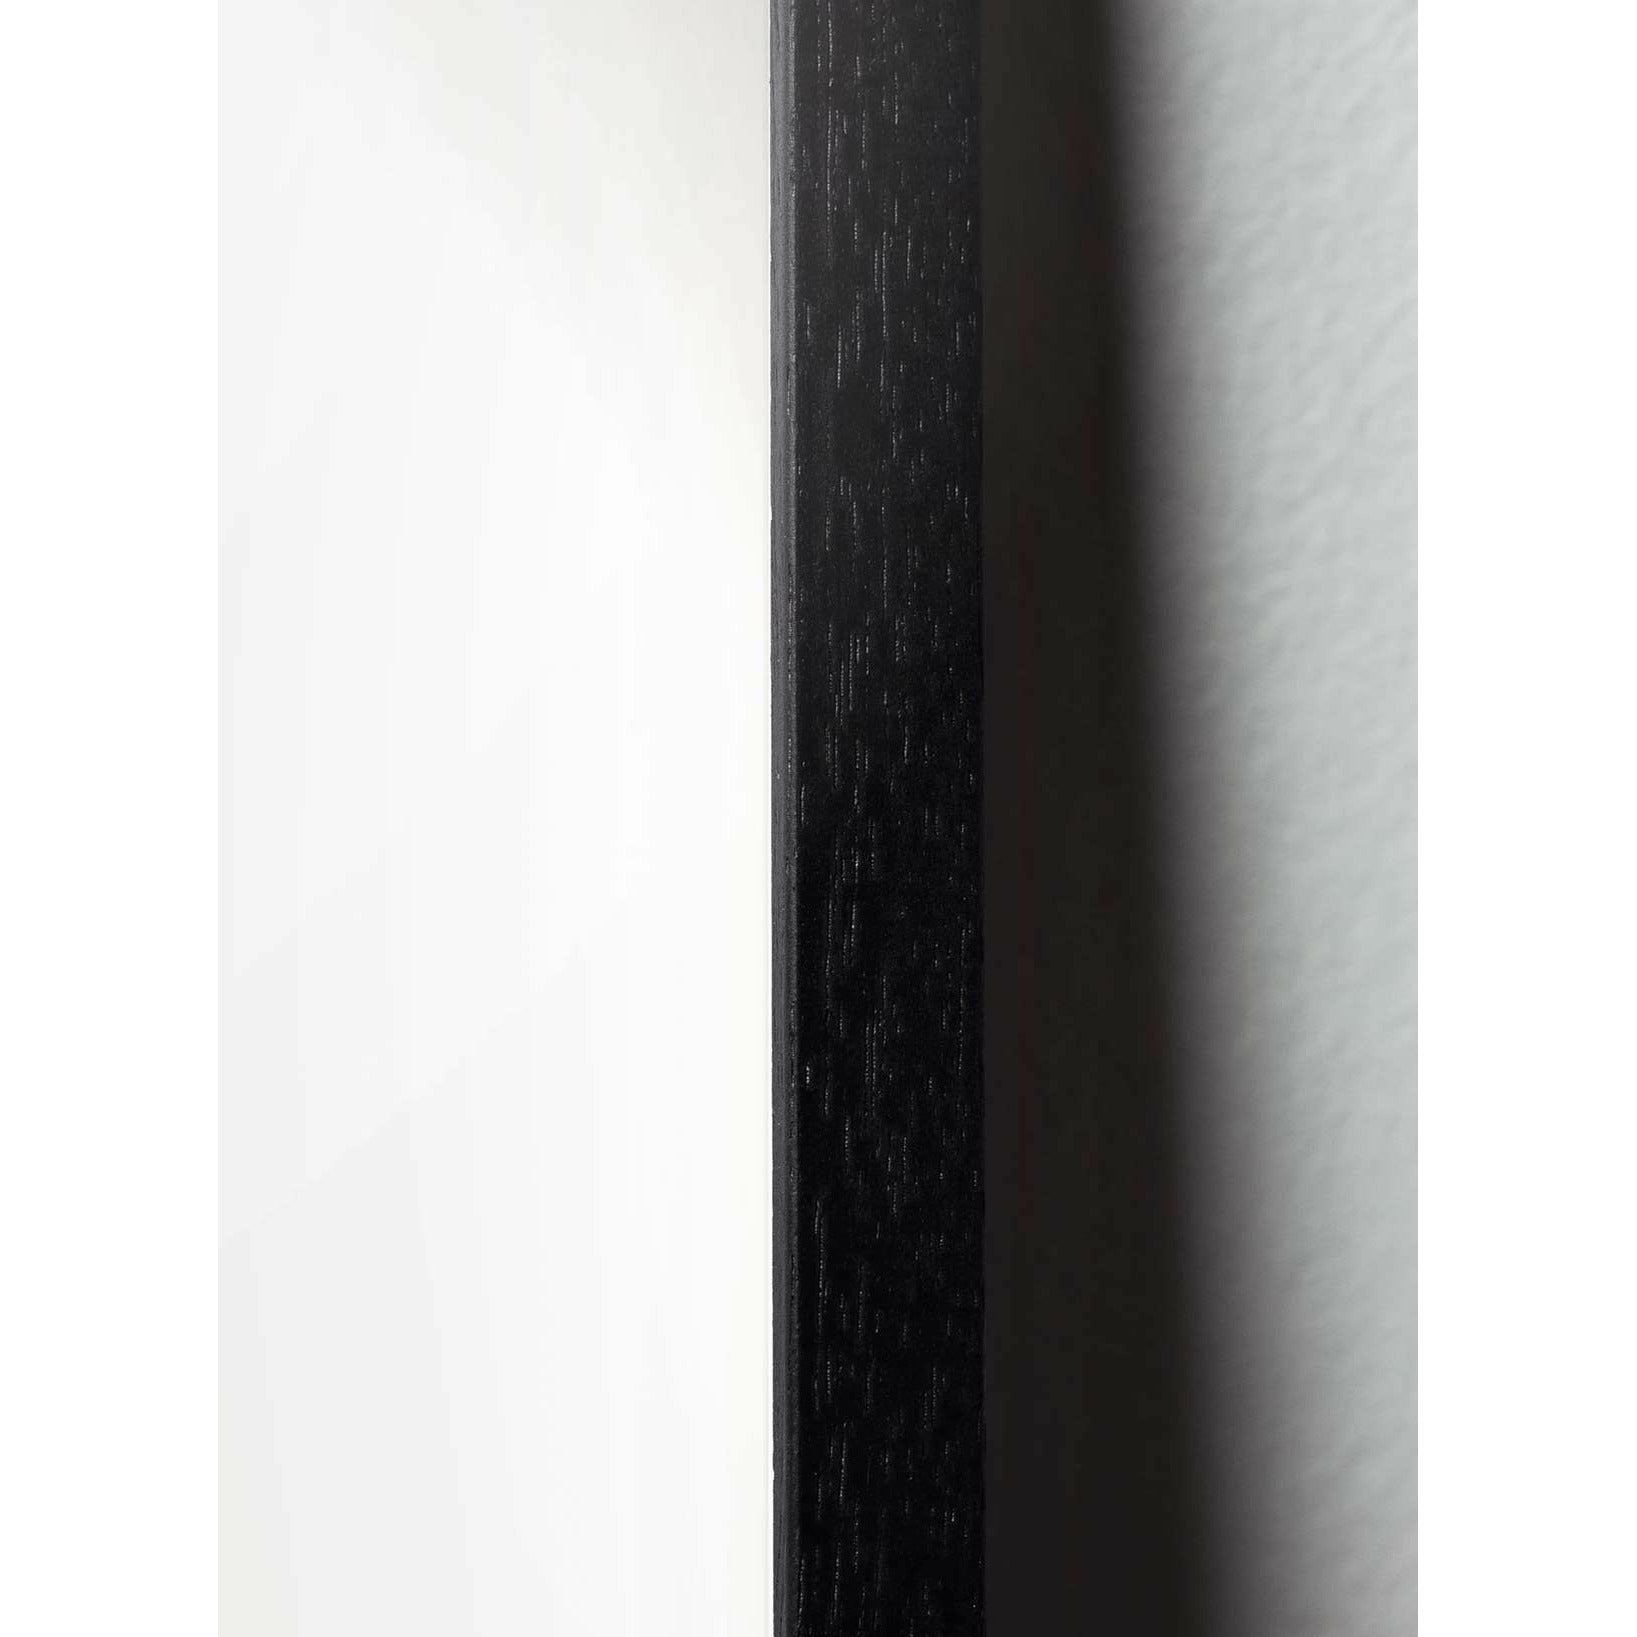 Brainchild Släpp klassisk affisch, ram i svart -målat trä 30x40 cm, mörkblå bakgrund